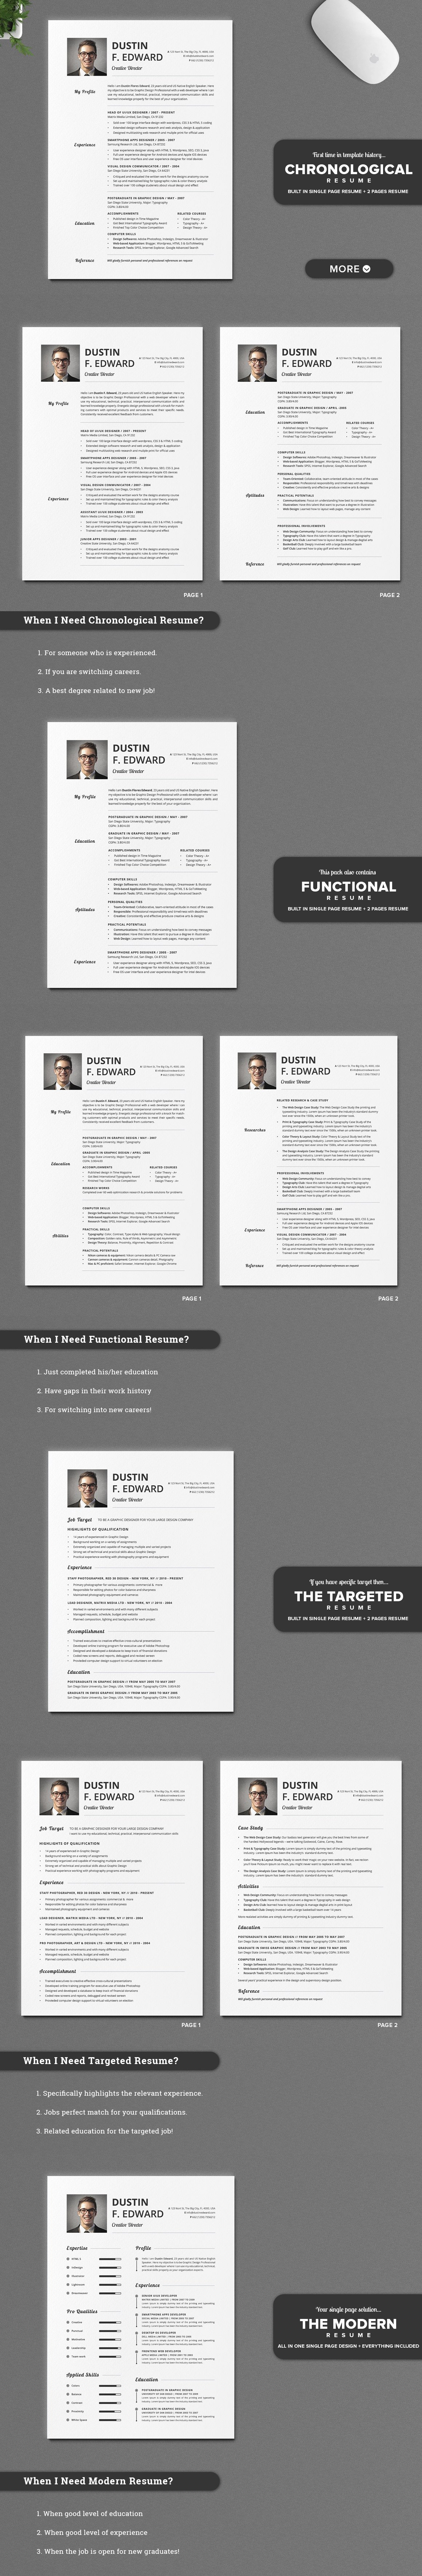 21 Timeless Resume CV Set No Icons preview image.